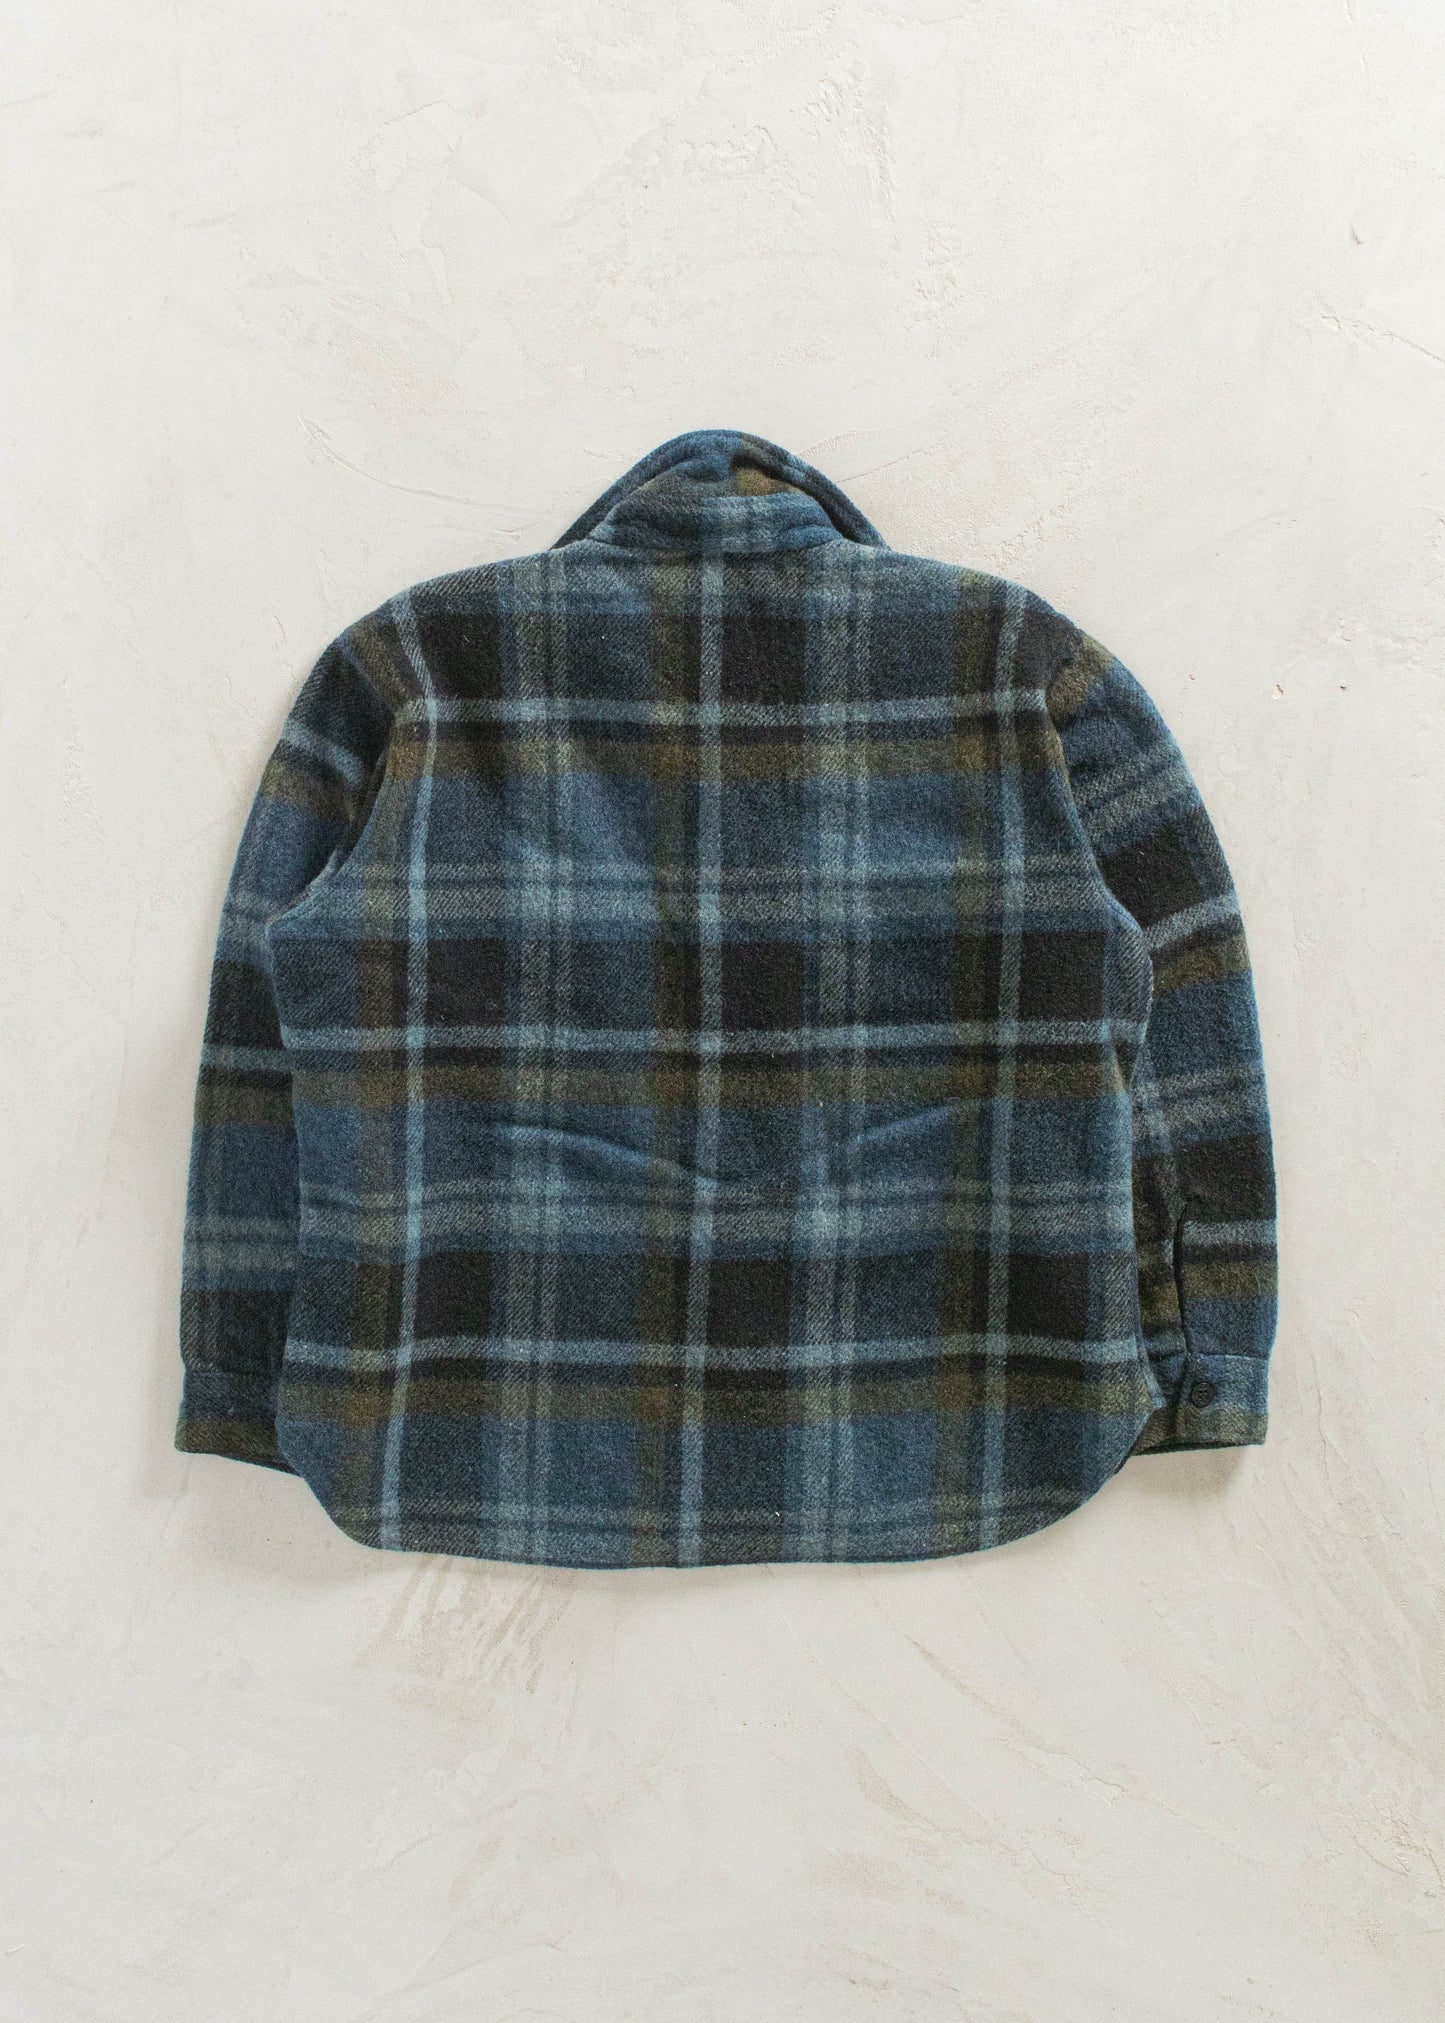 Vintage 1990s Kmart Wool Flannel Button Up Shirt Size S/M